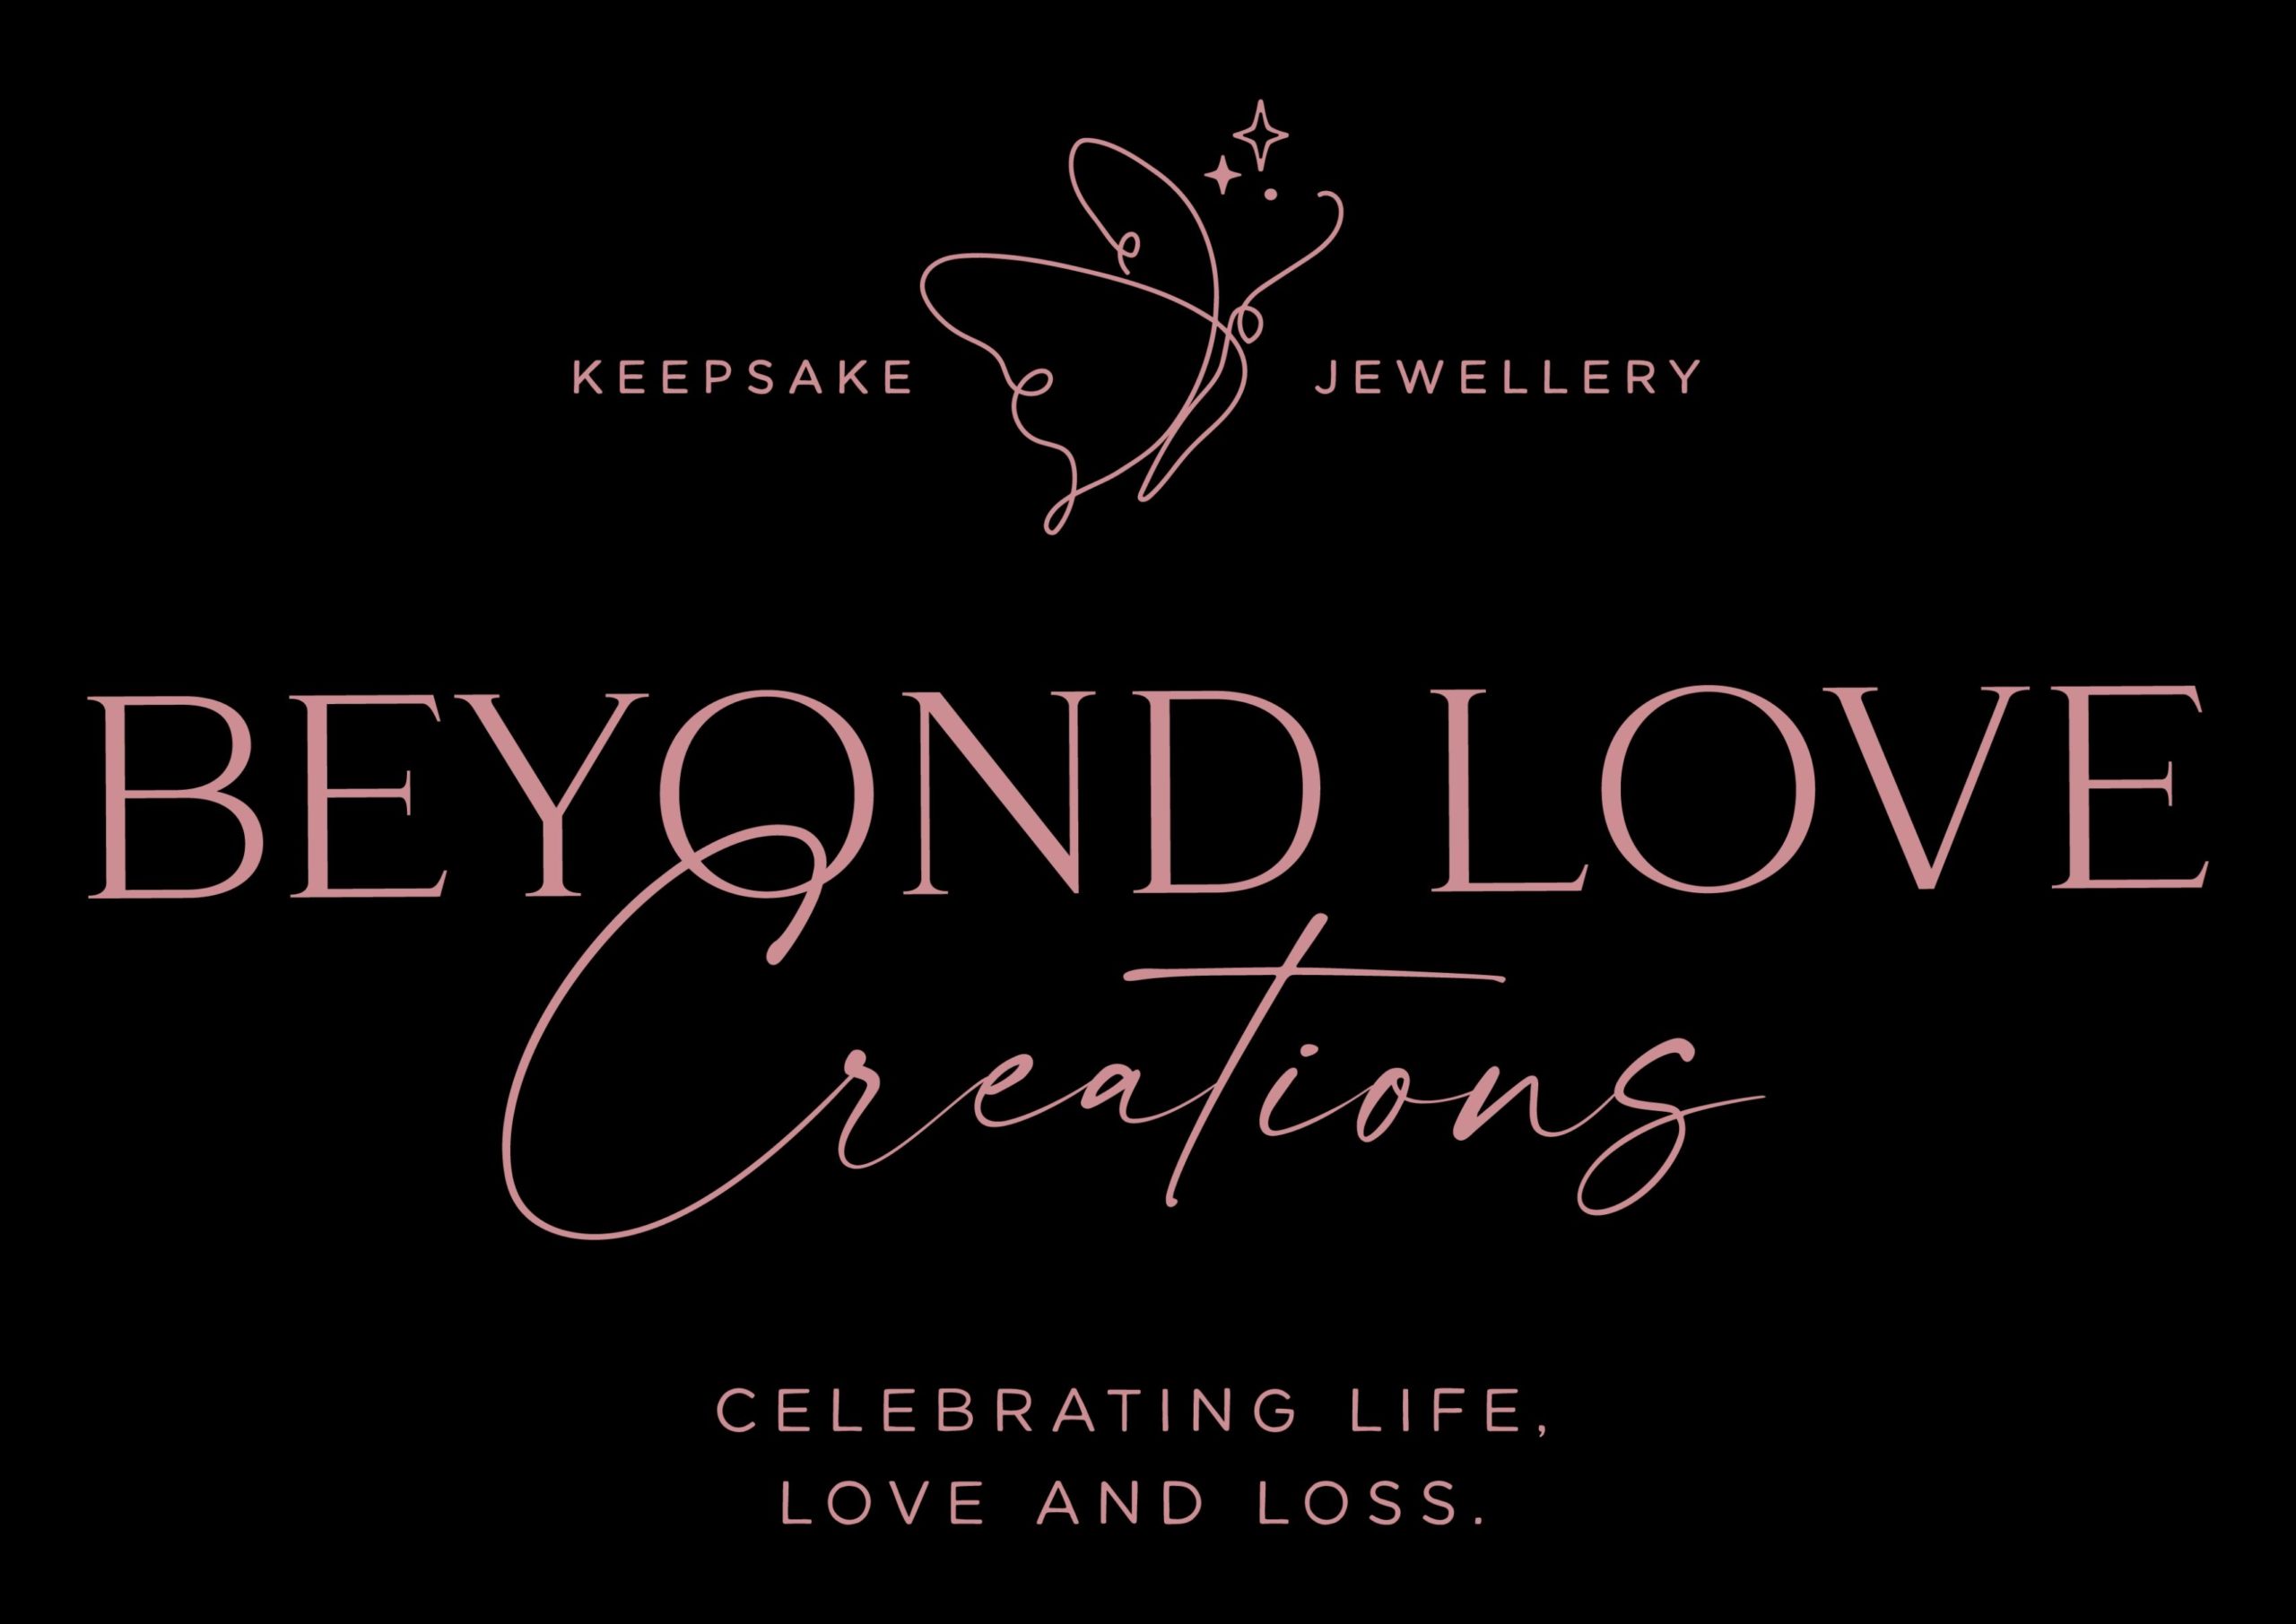 beyond love creations logo